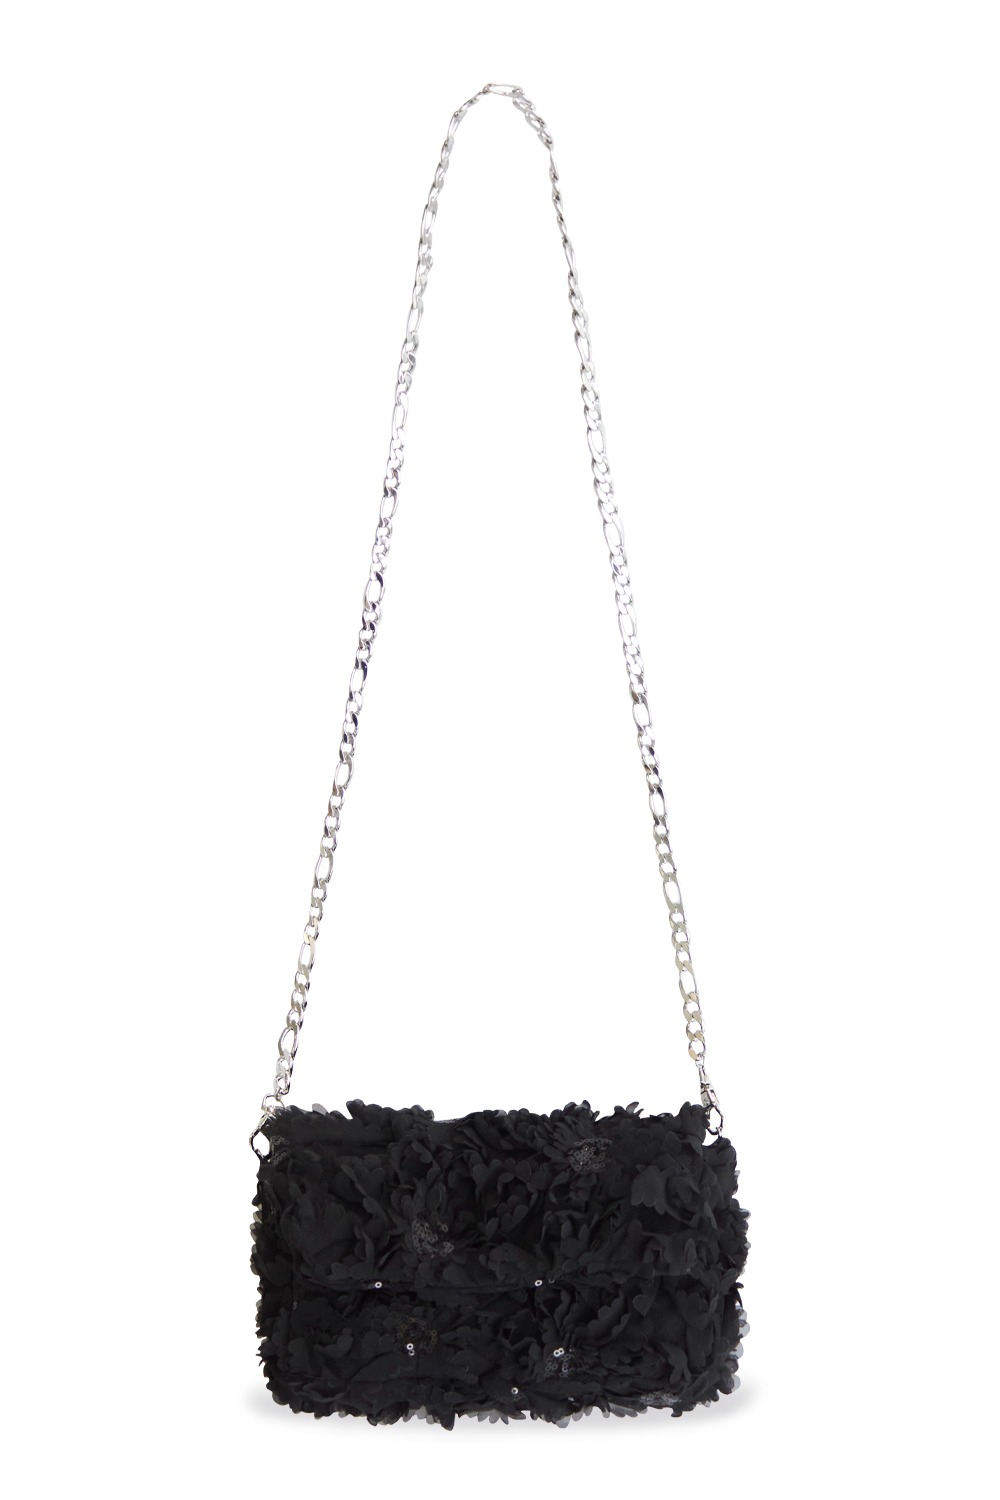 Addiction couture chain bag (Black)